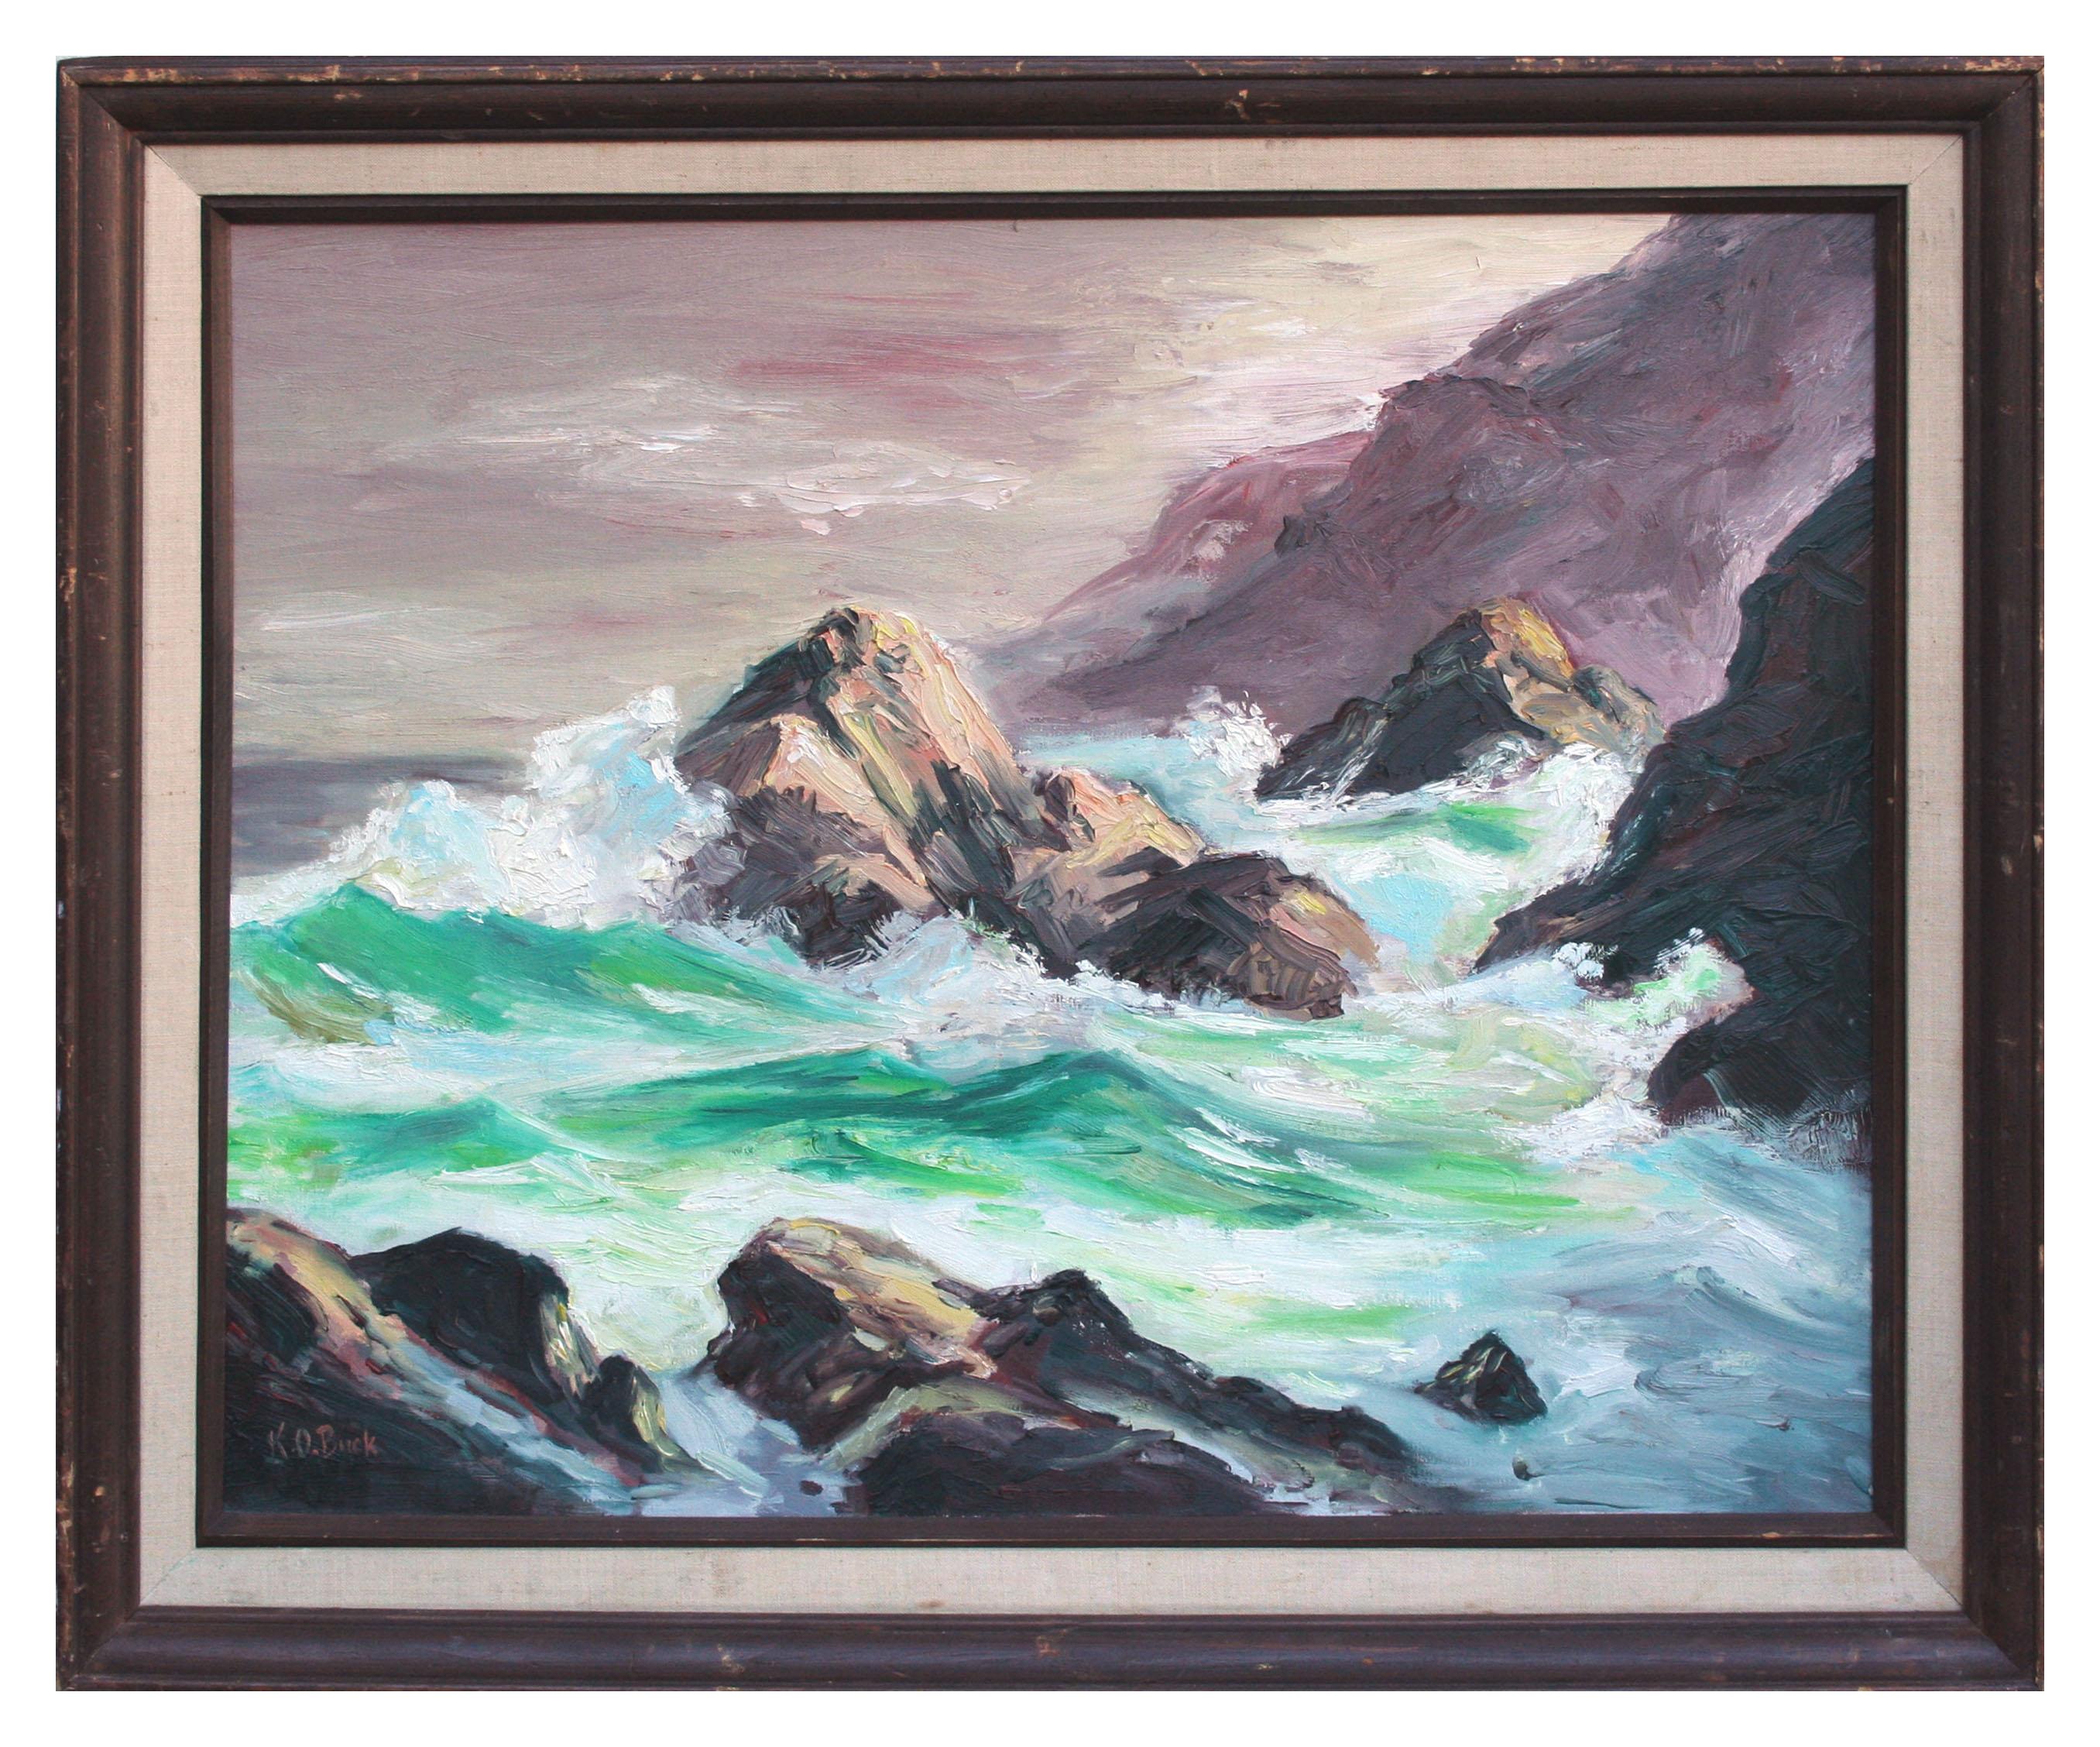 K.O. Buck Landscape Painting - California Coastal Waves Seascape Original Oil on Canvas